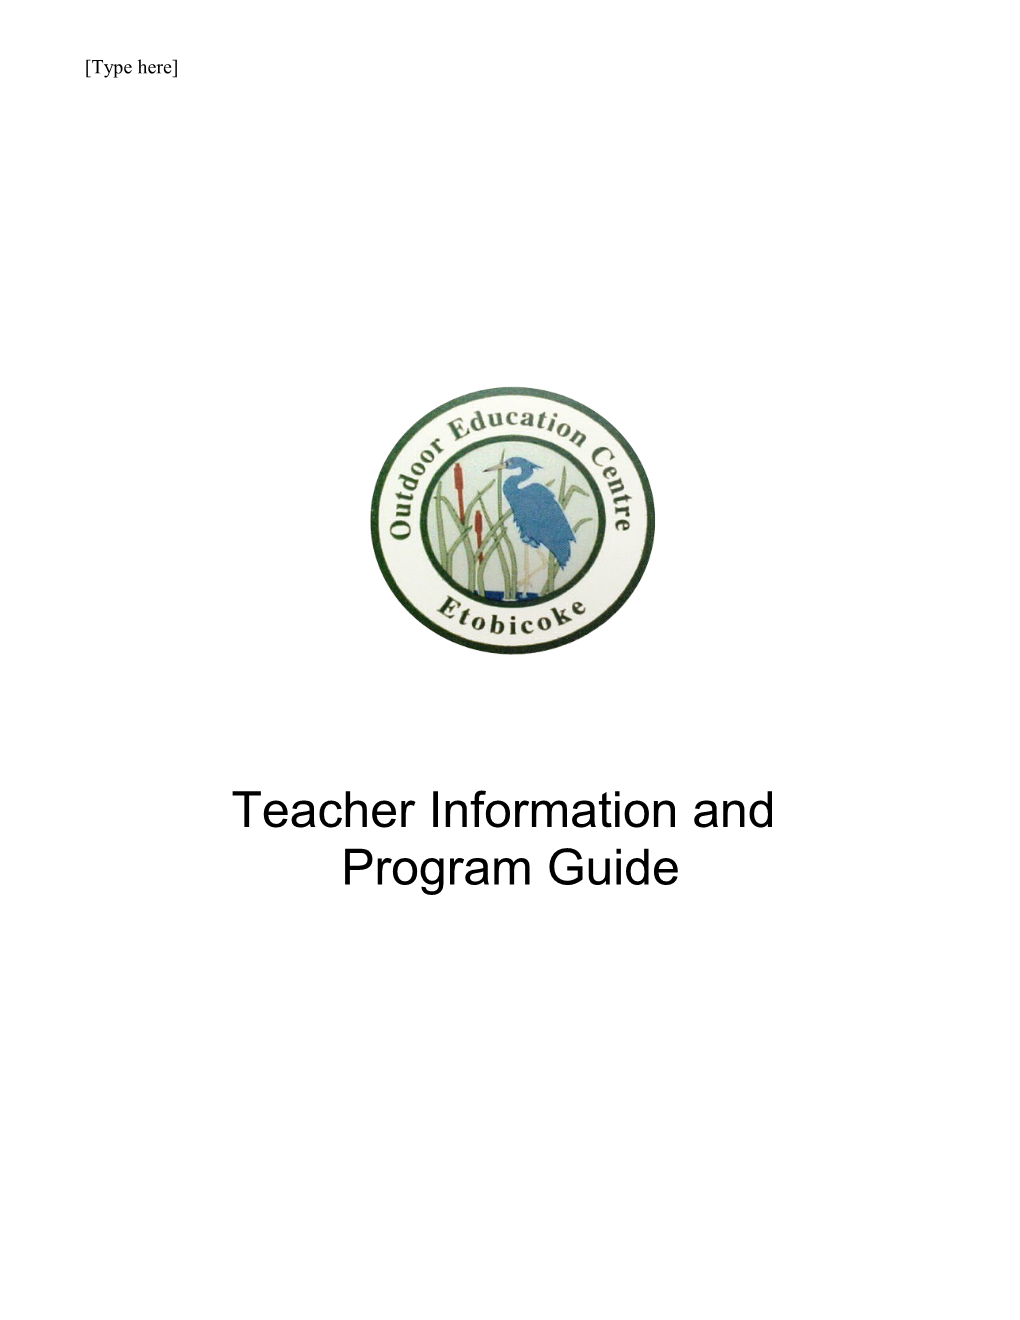 Teacher Information And